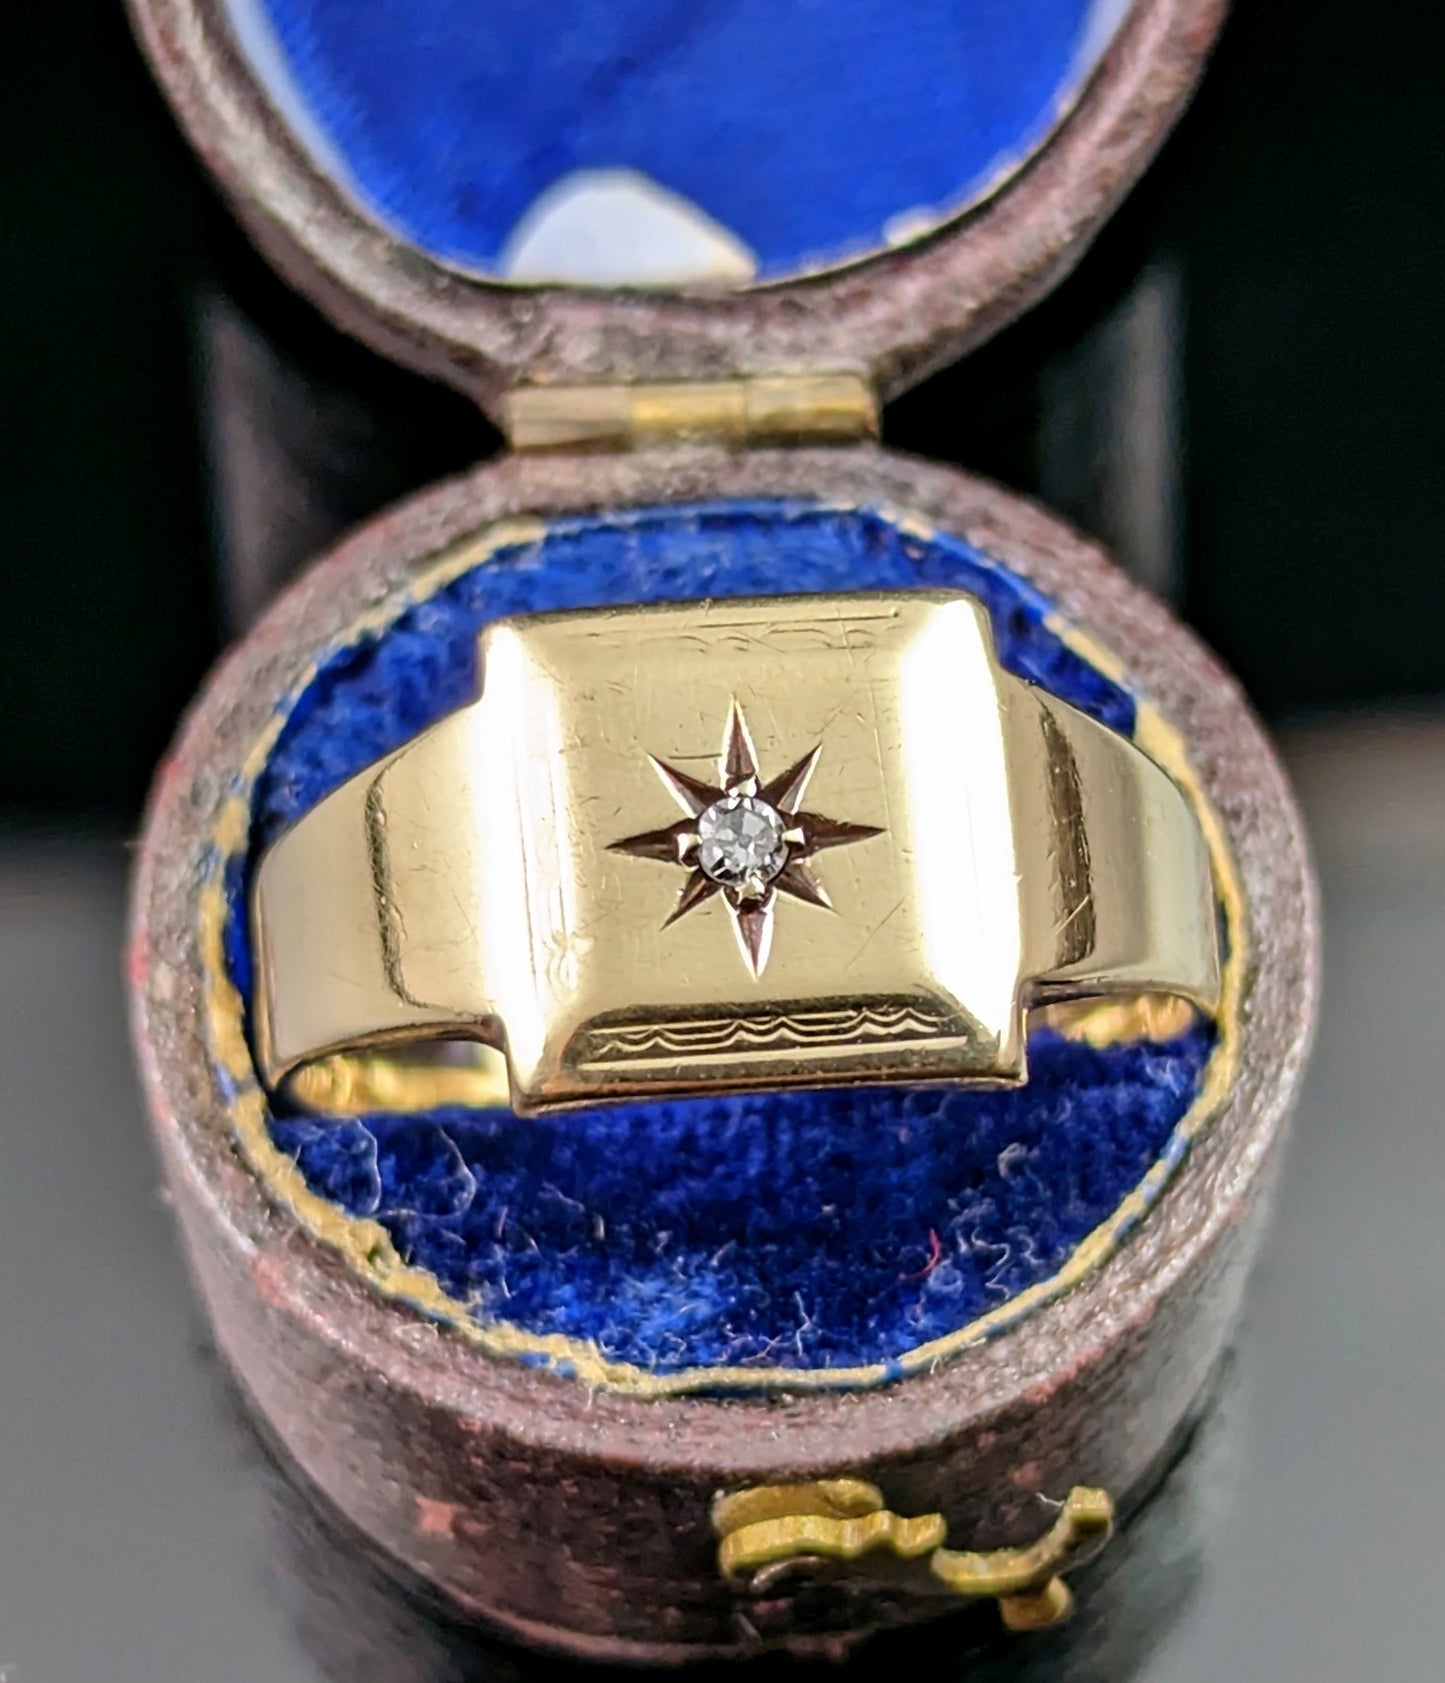 Vintage Gypsy set Diamond signet ring, 9ct gold, Art Deco